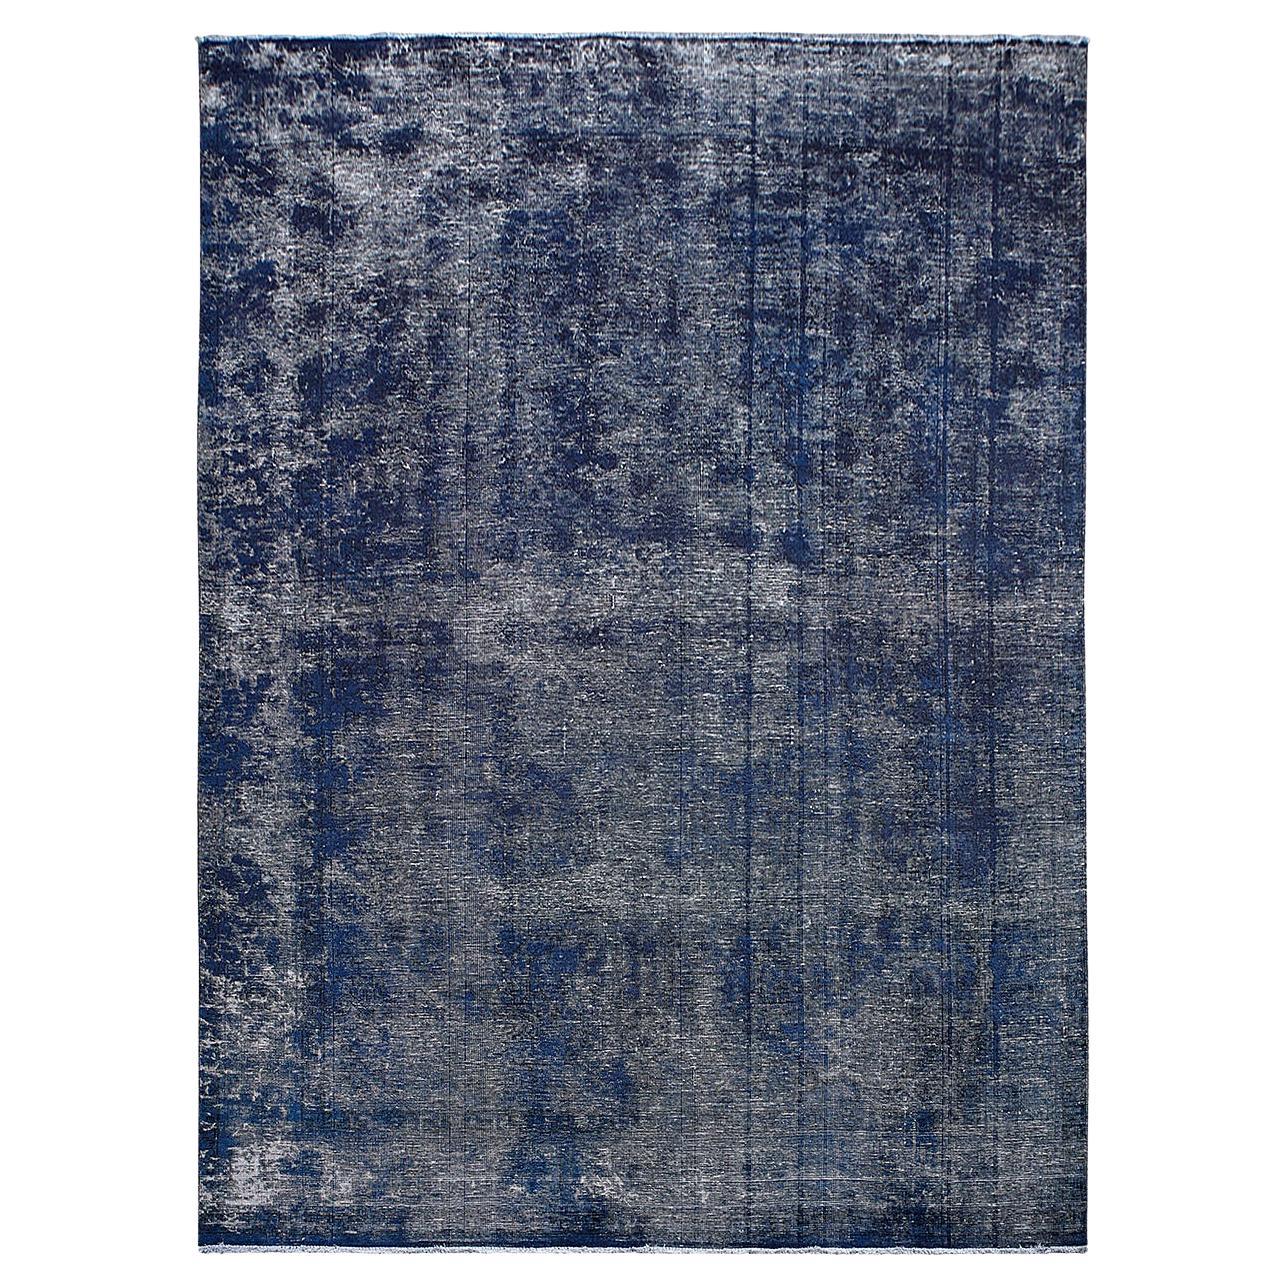 Blue Trash RocknRoll Carpet by Massimo Copenhagen